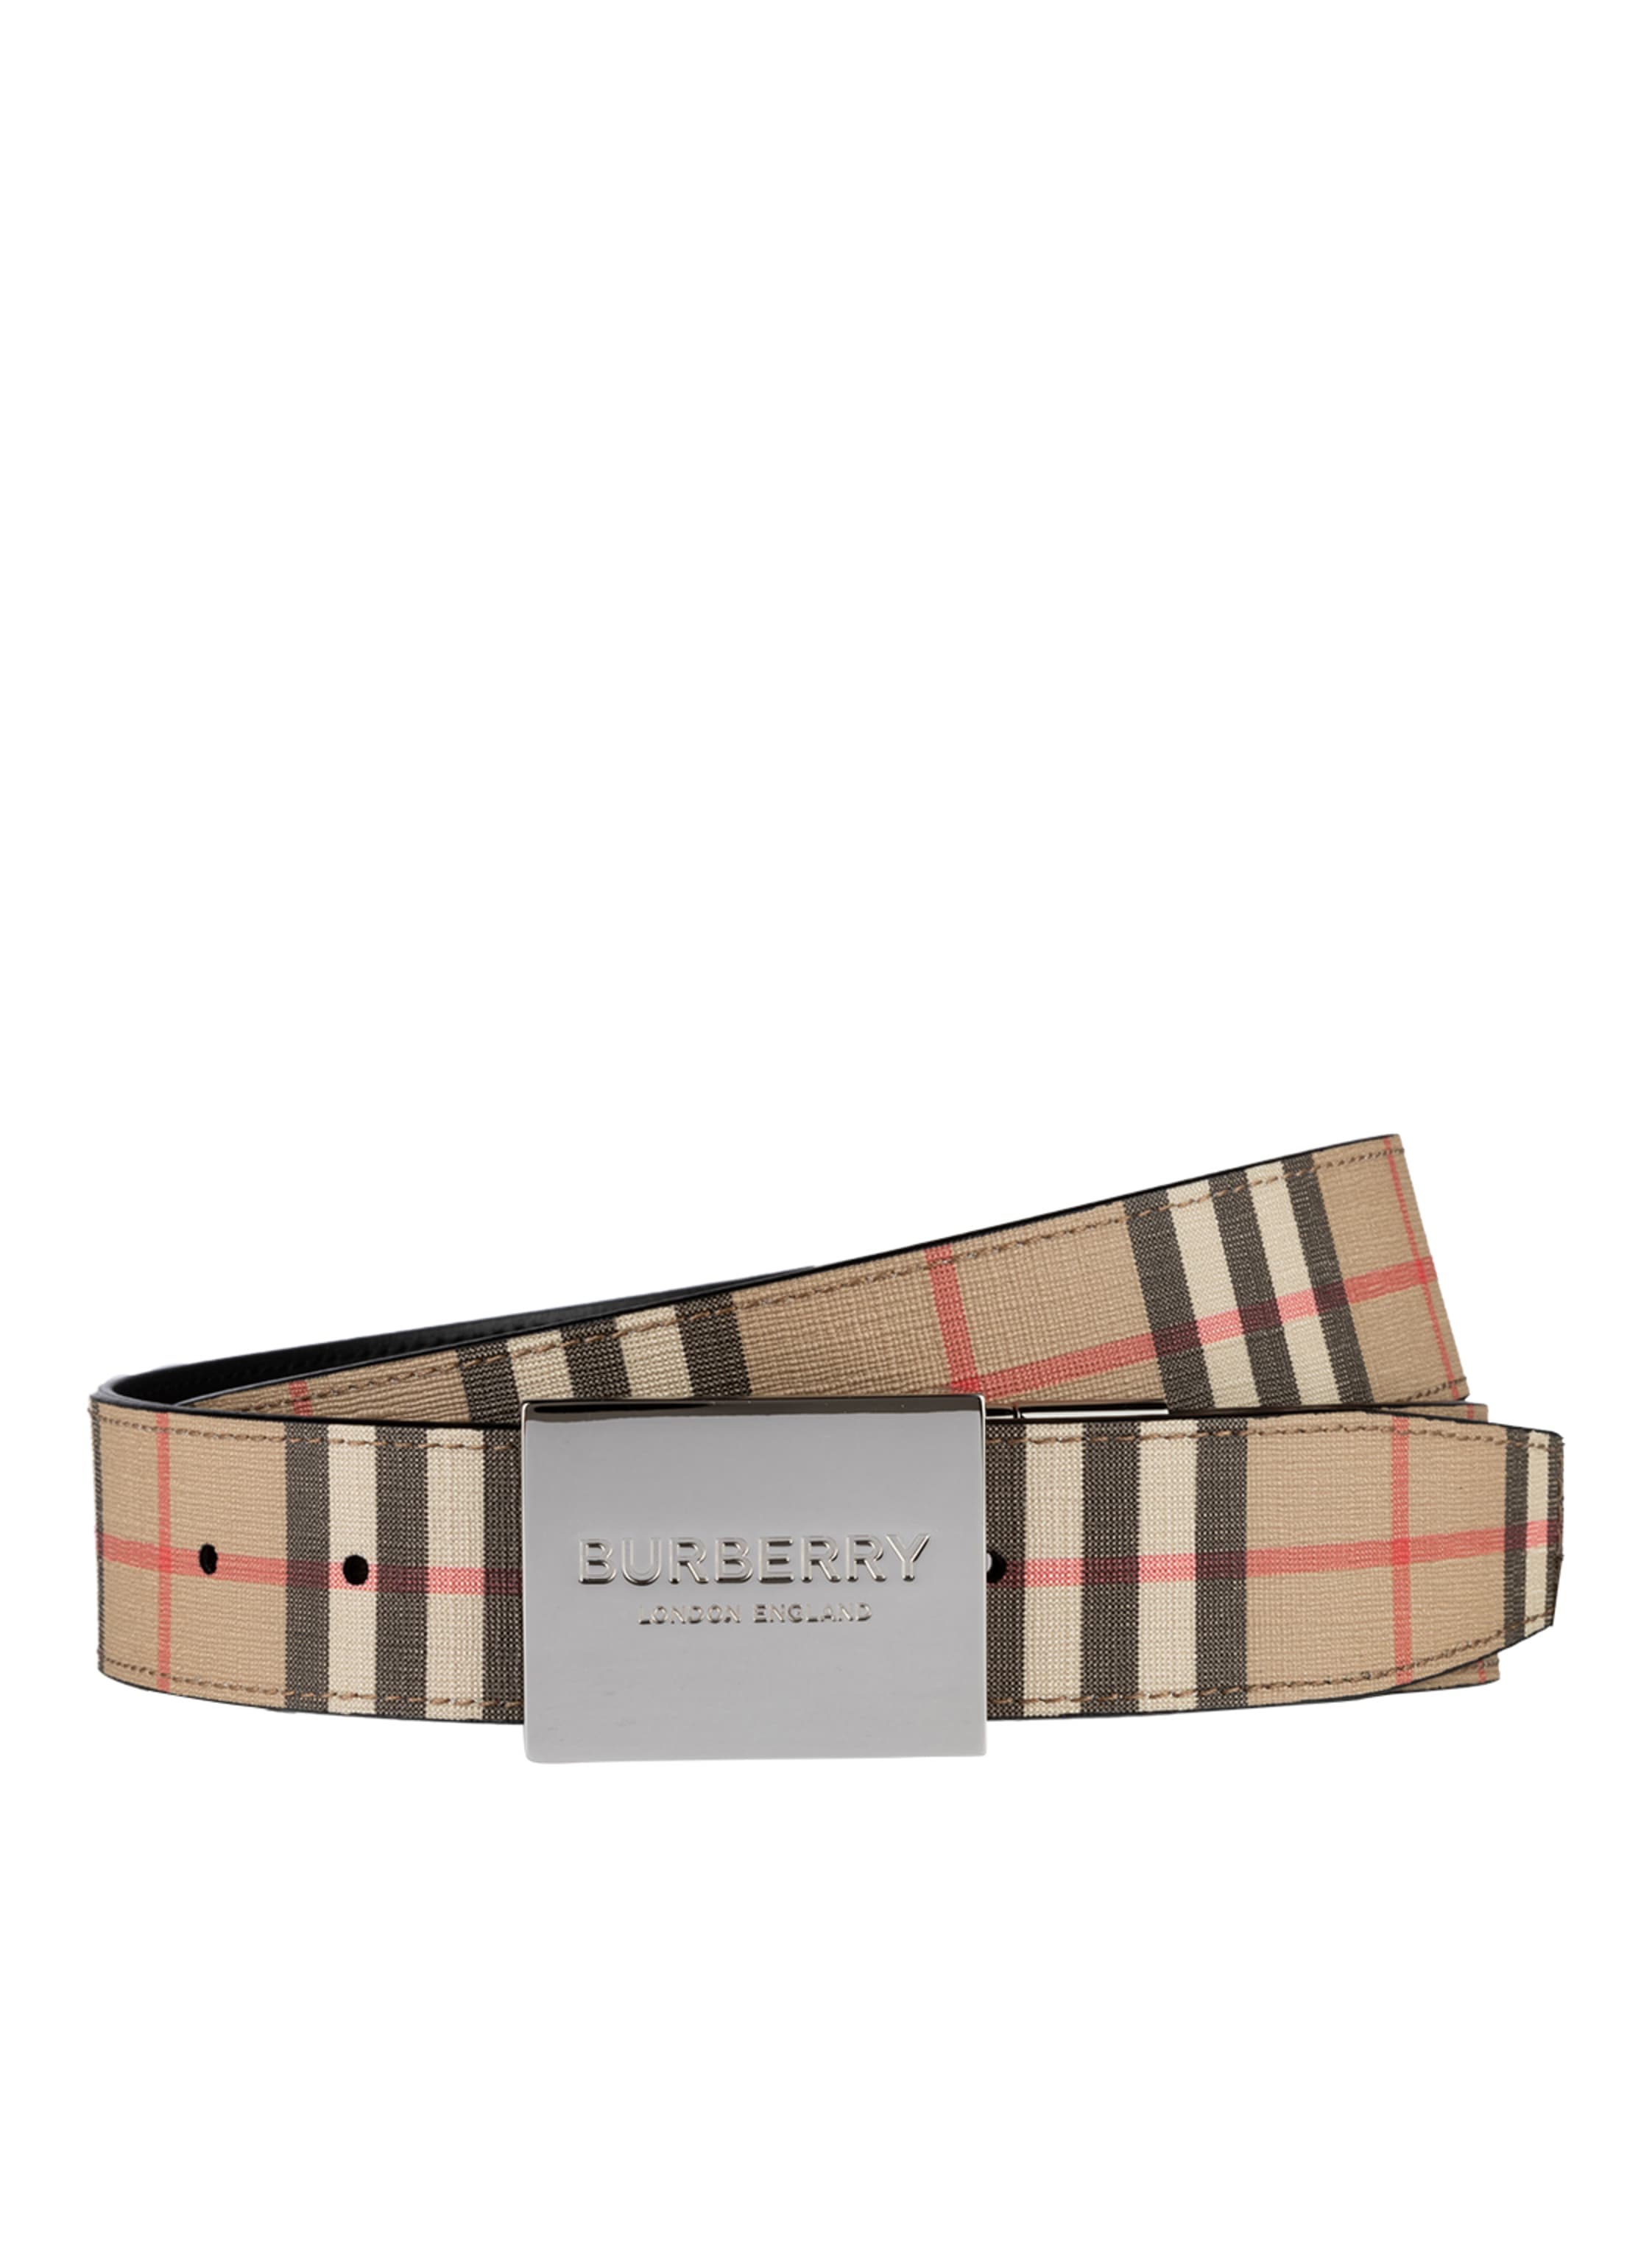 BURBERRY Reversible belt in beige/ black/ red | Breuninger